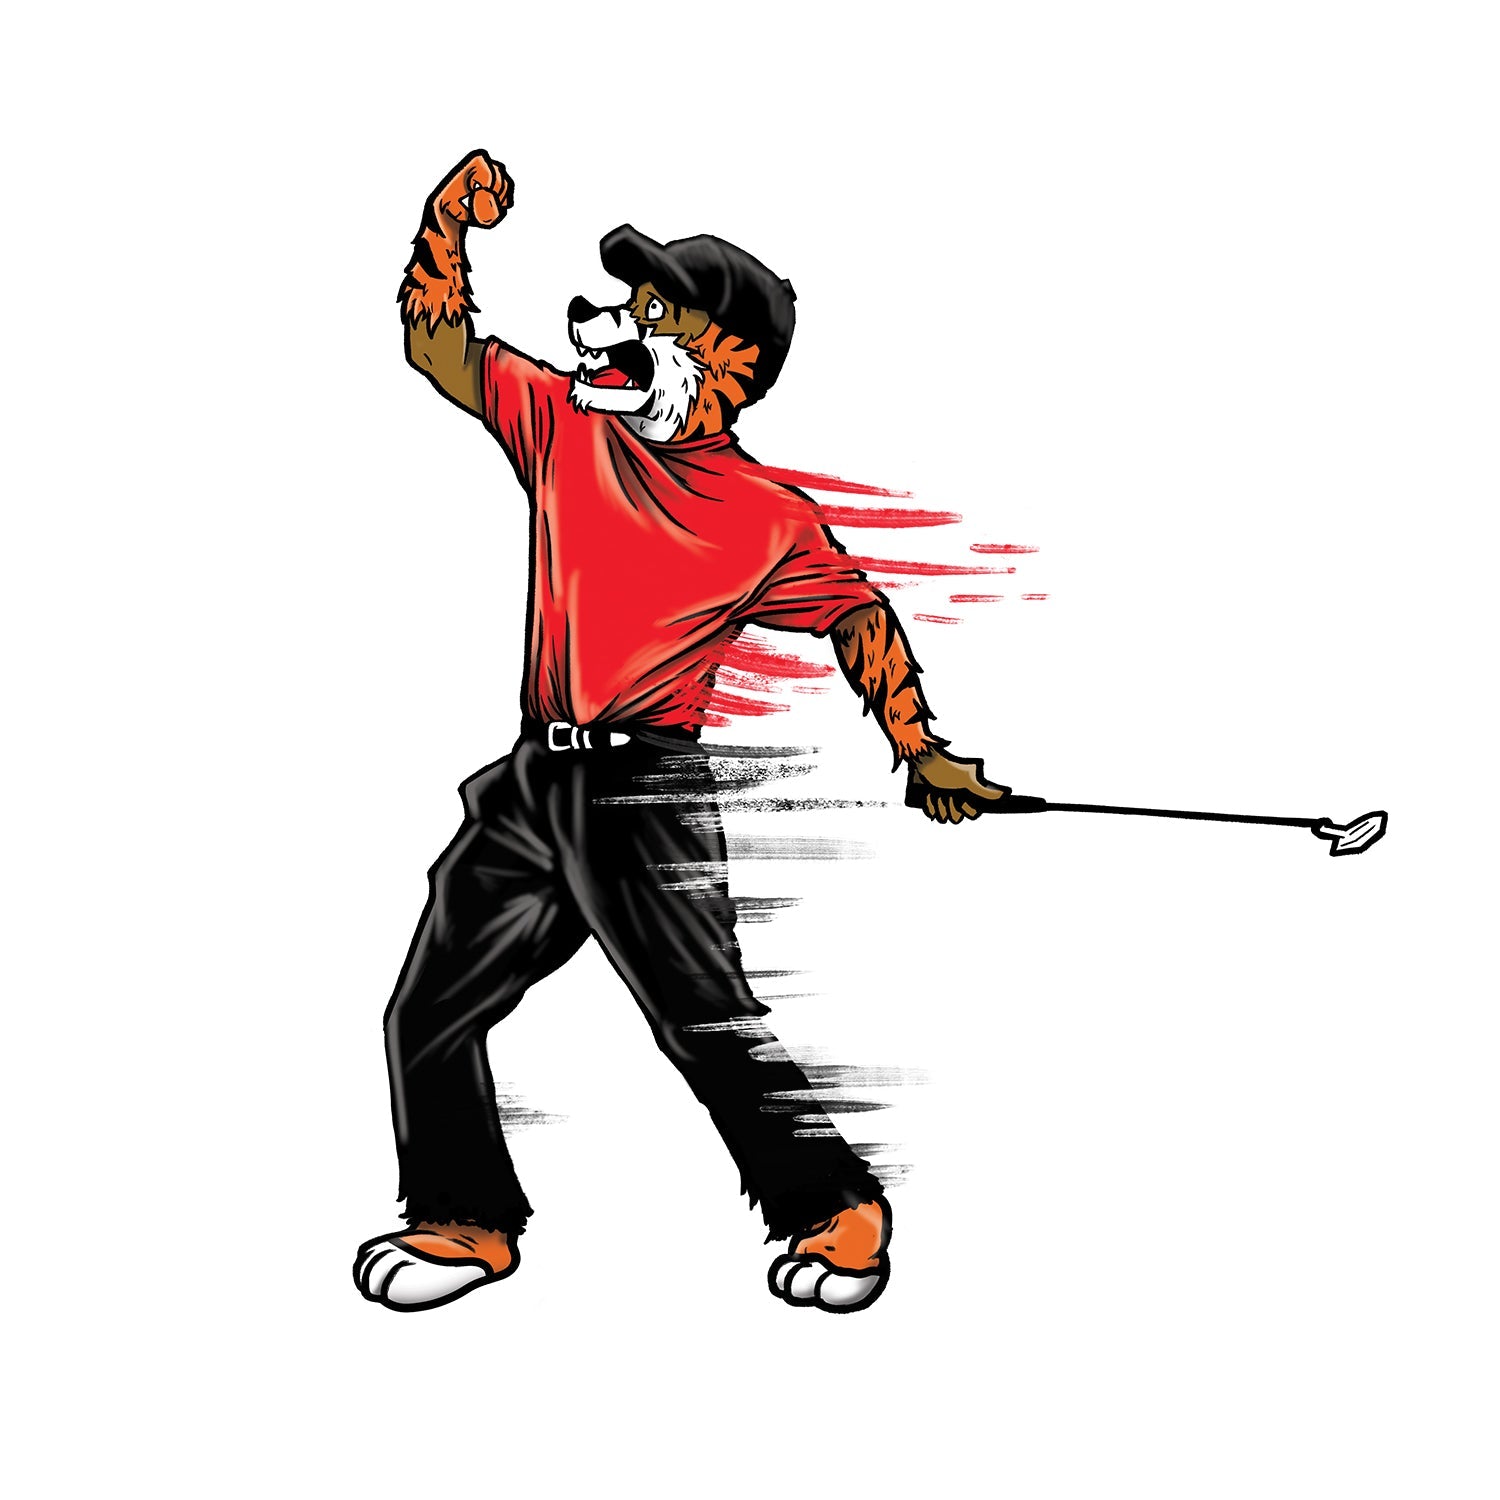 Tiger Woods T Shirt